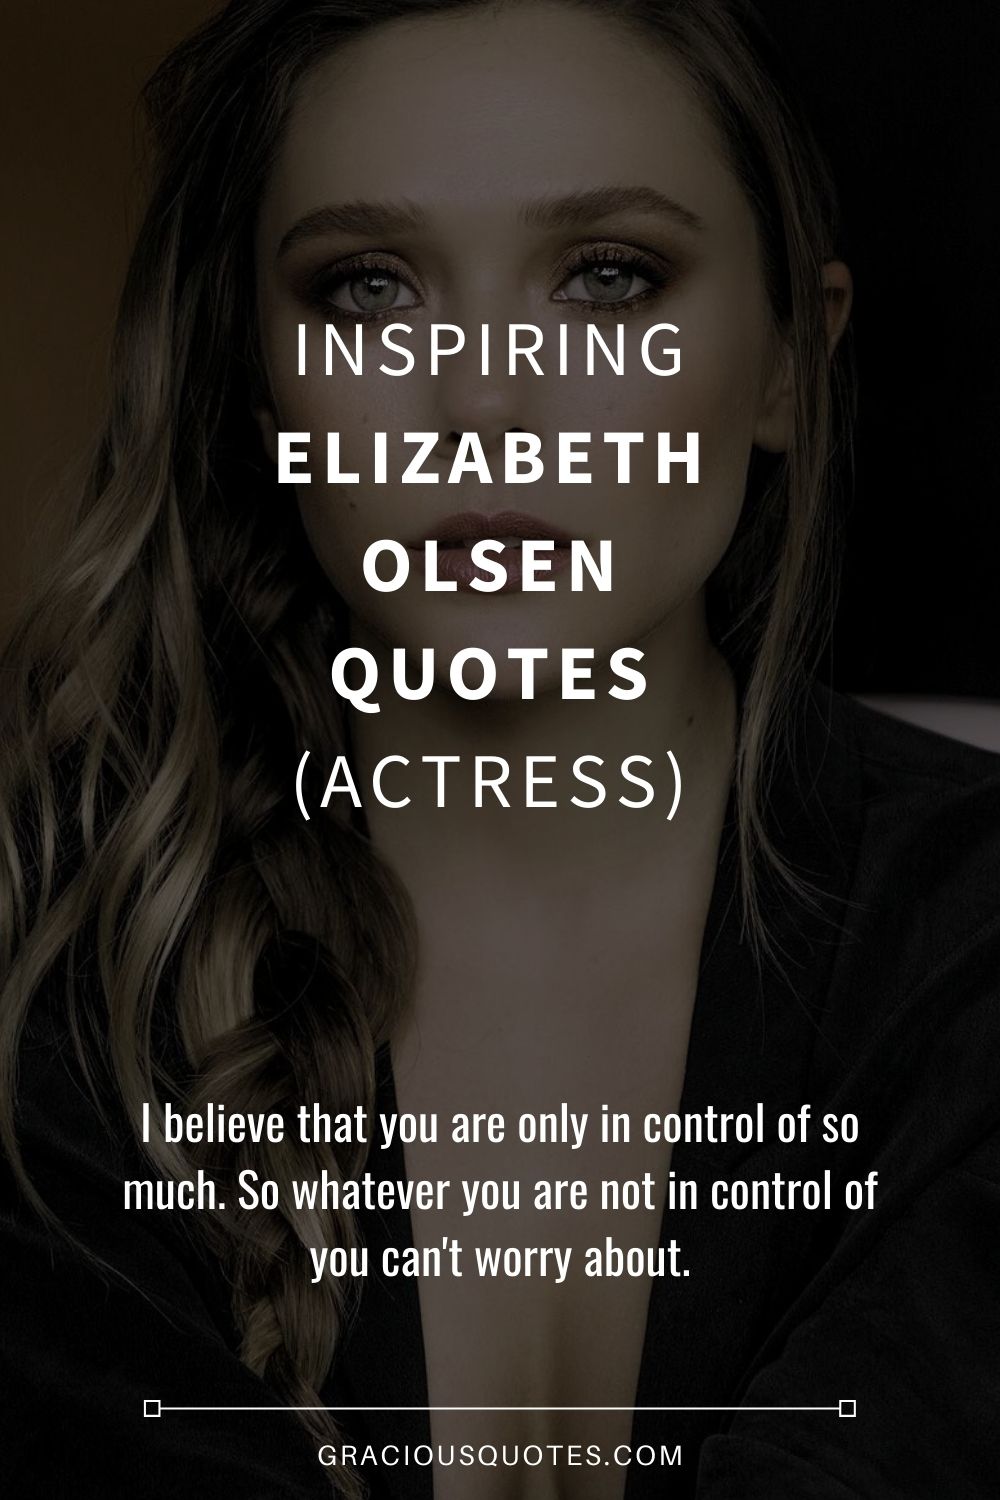 Inspiring Elizabeth Olsen Quotes (ACTRESS) - Gracious Quotes